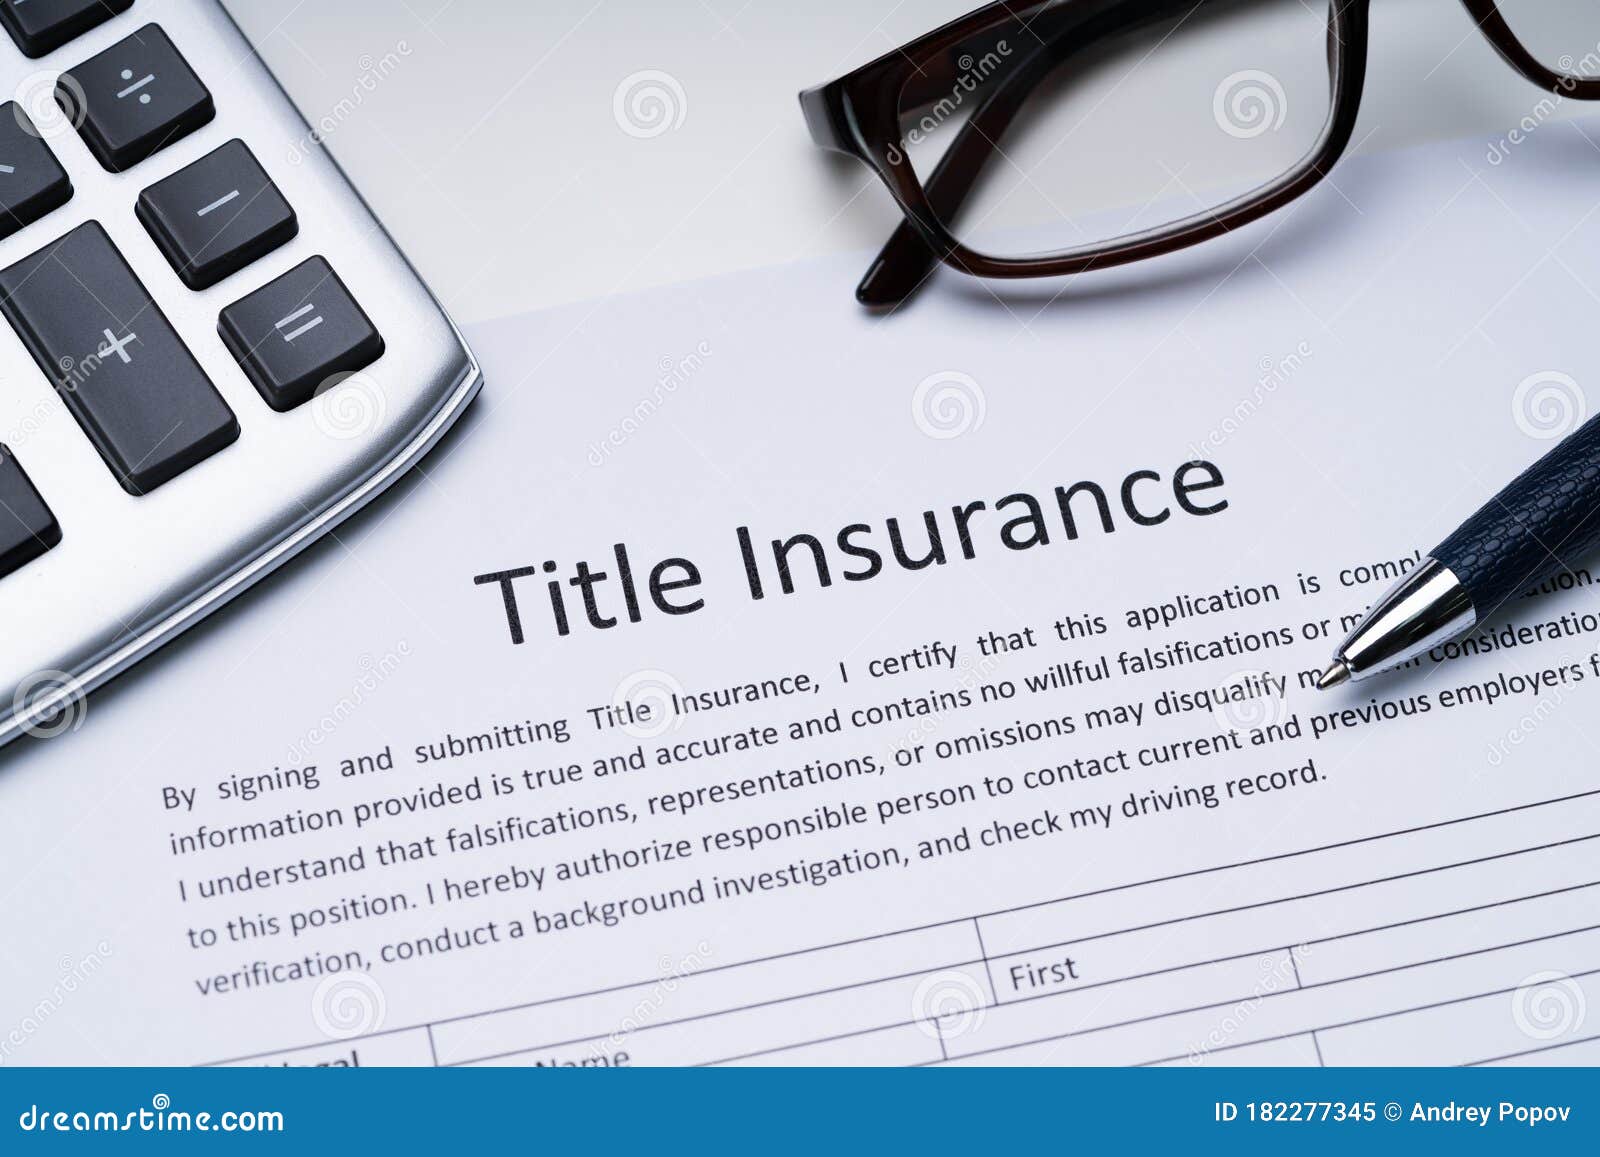 title insurance form over white desk